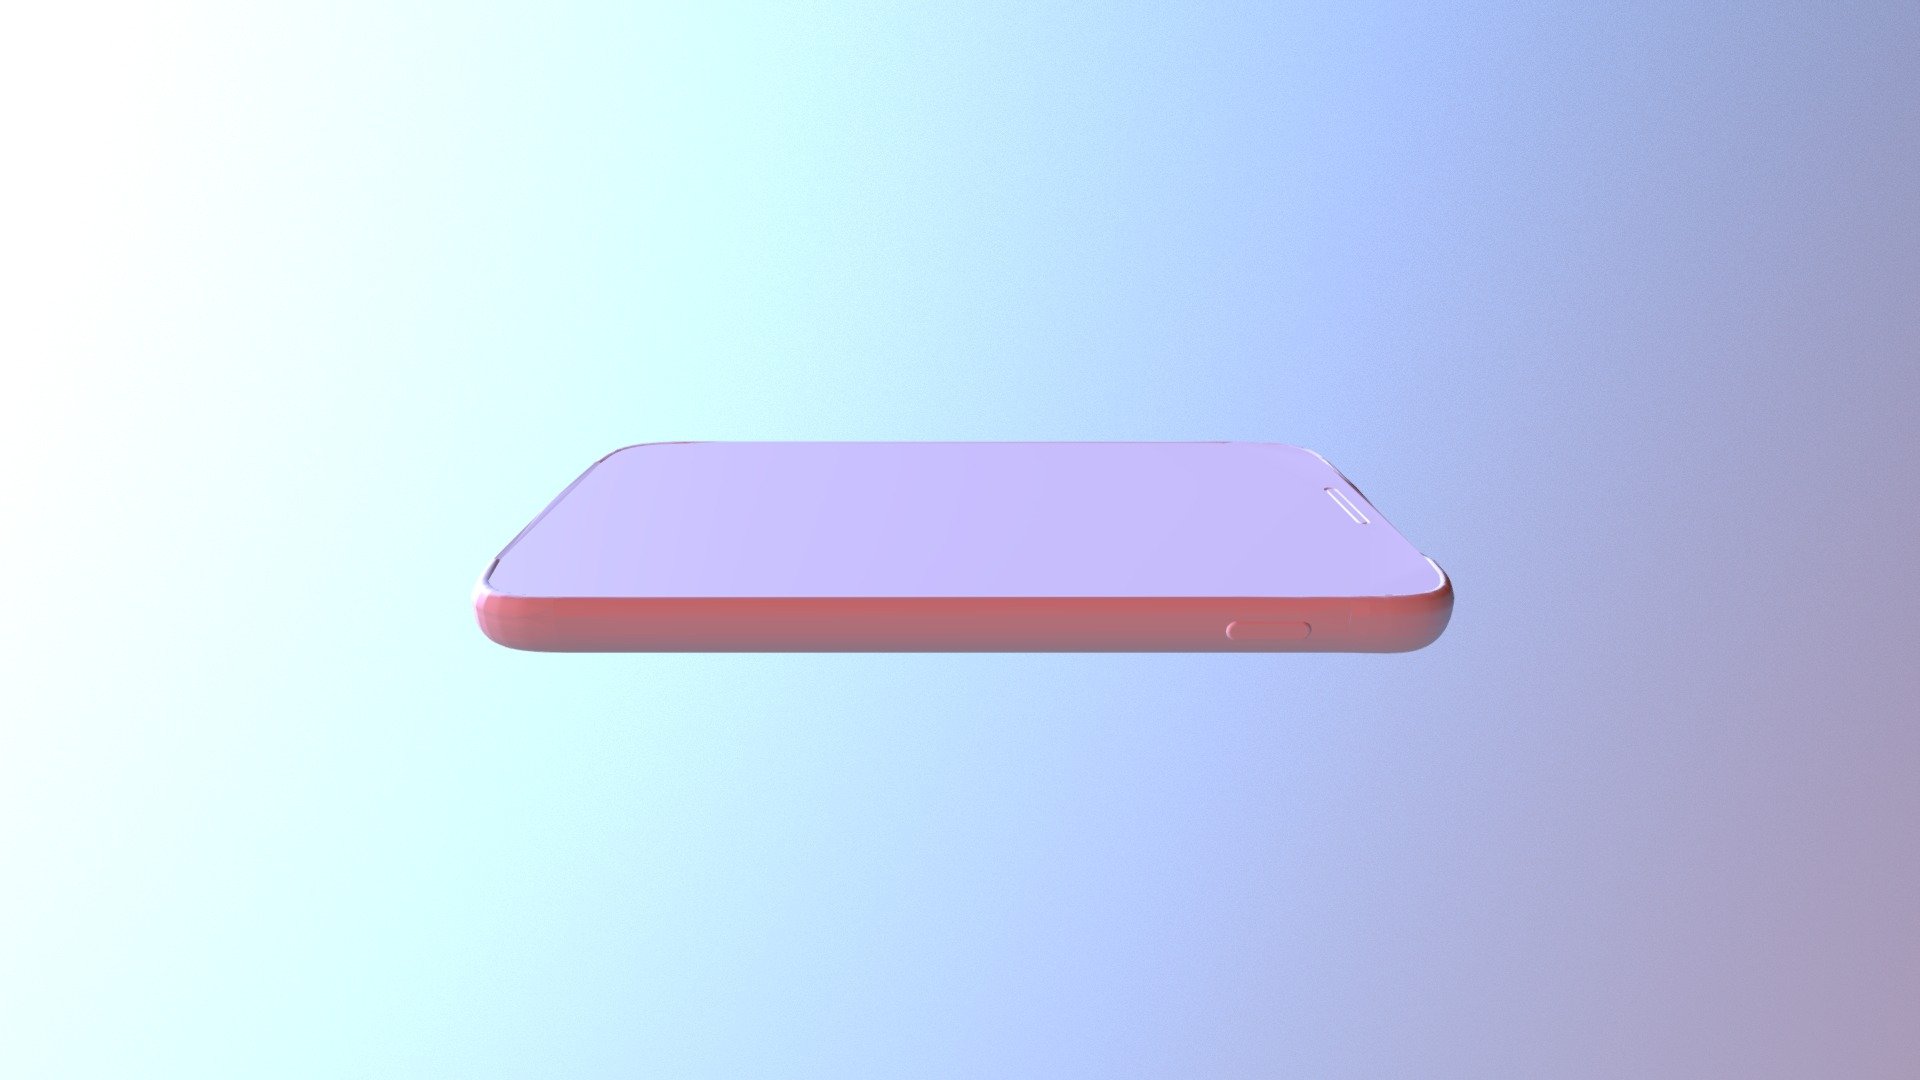 Phone Hybrid Solid Model